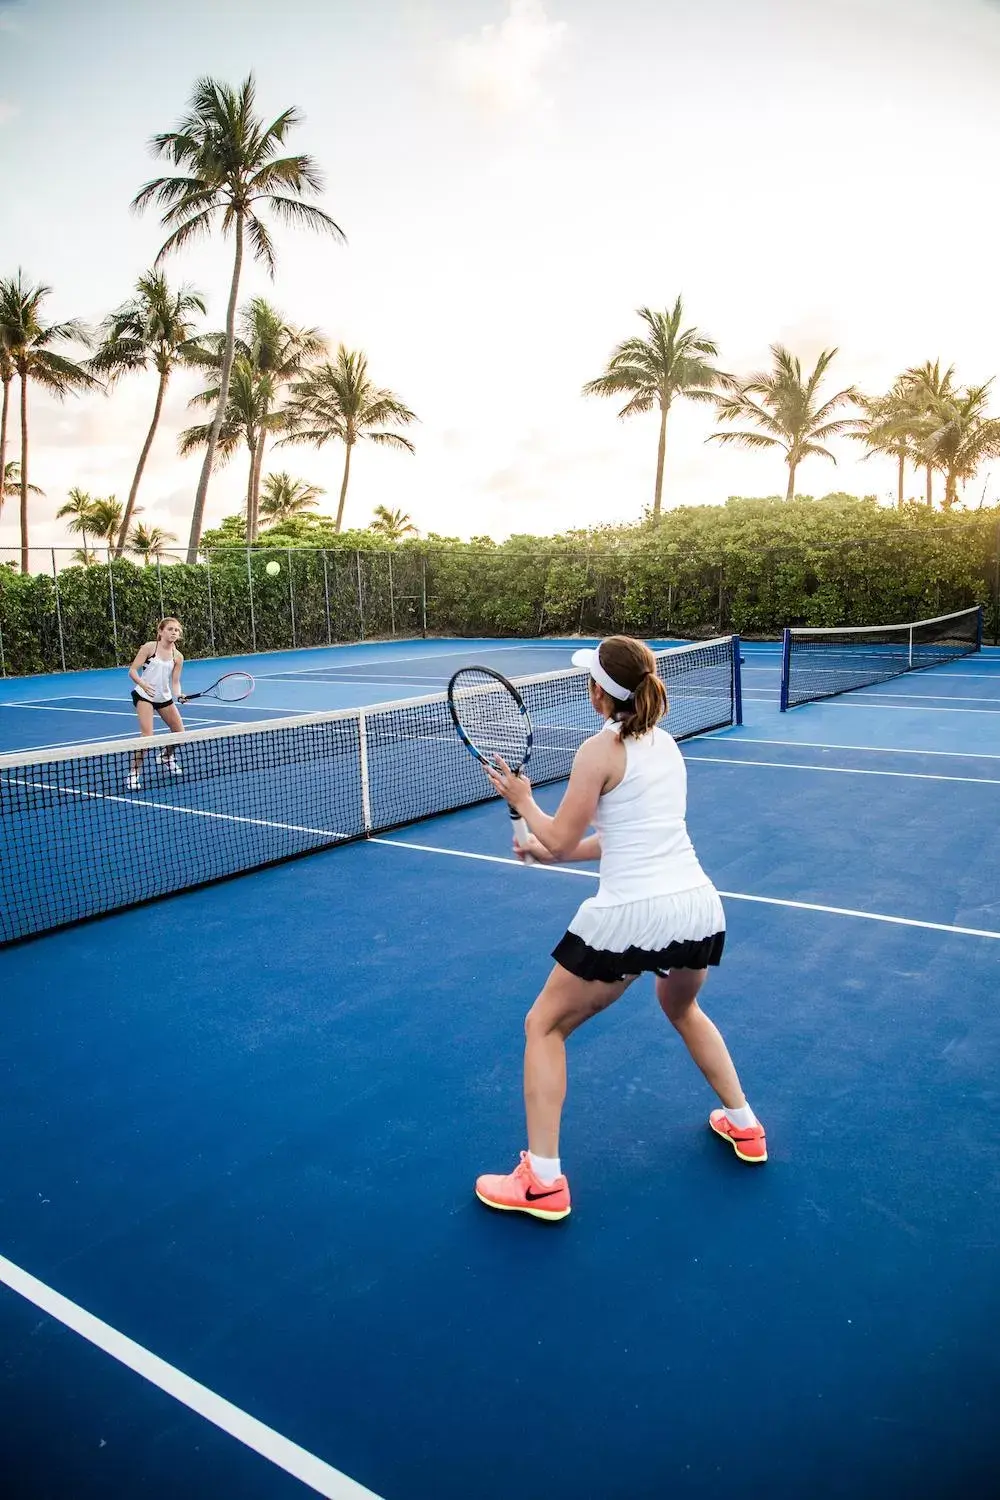 Tennis court in The Lago Mar Beach Resort and Club